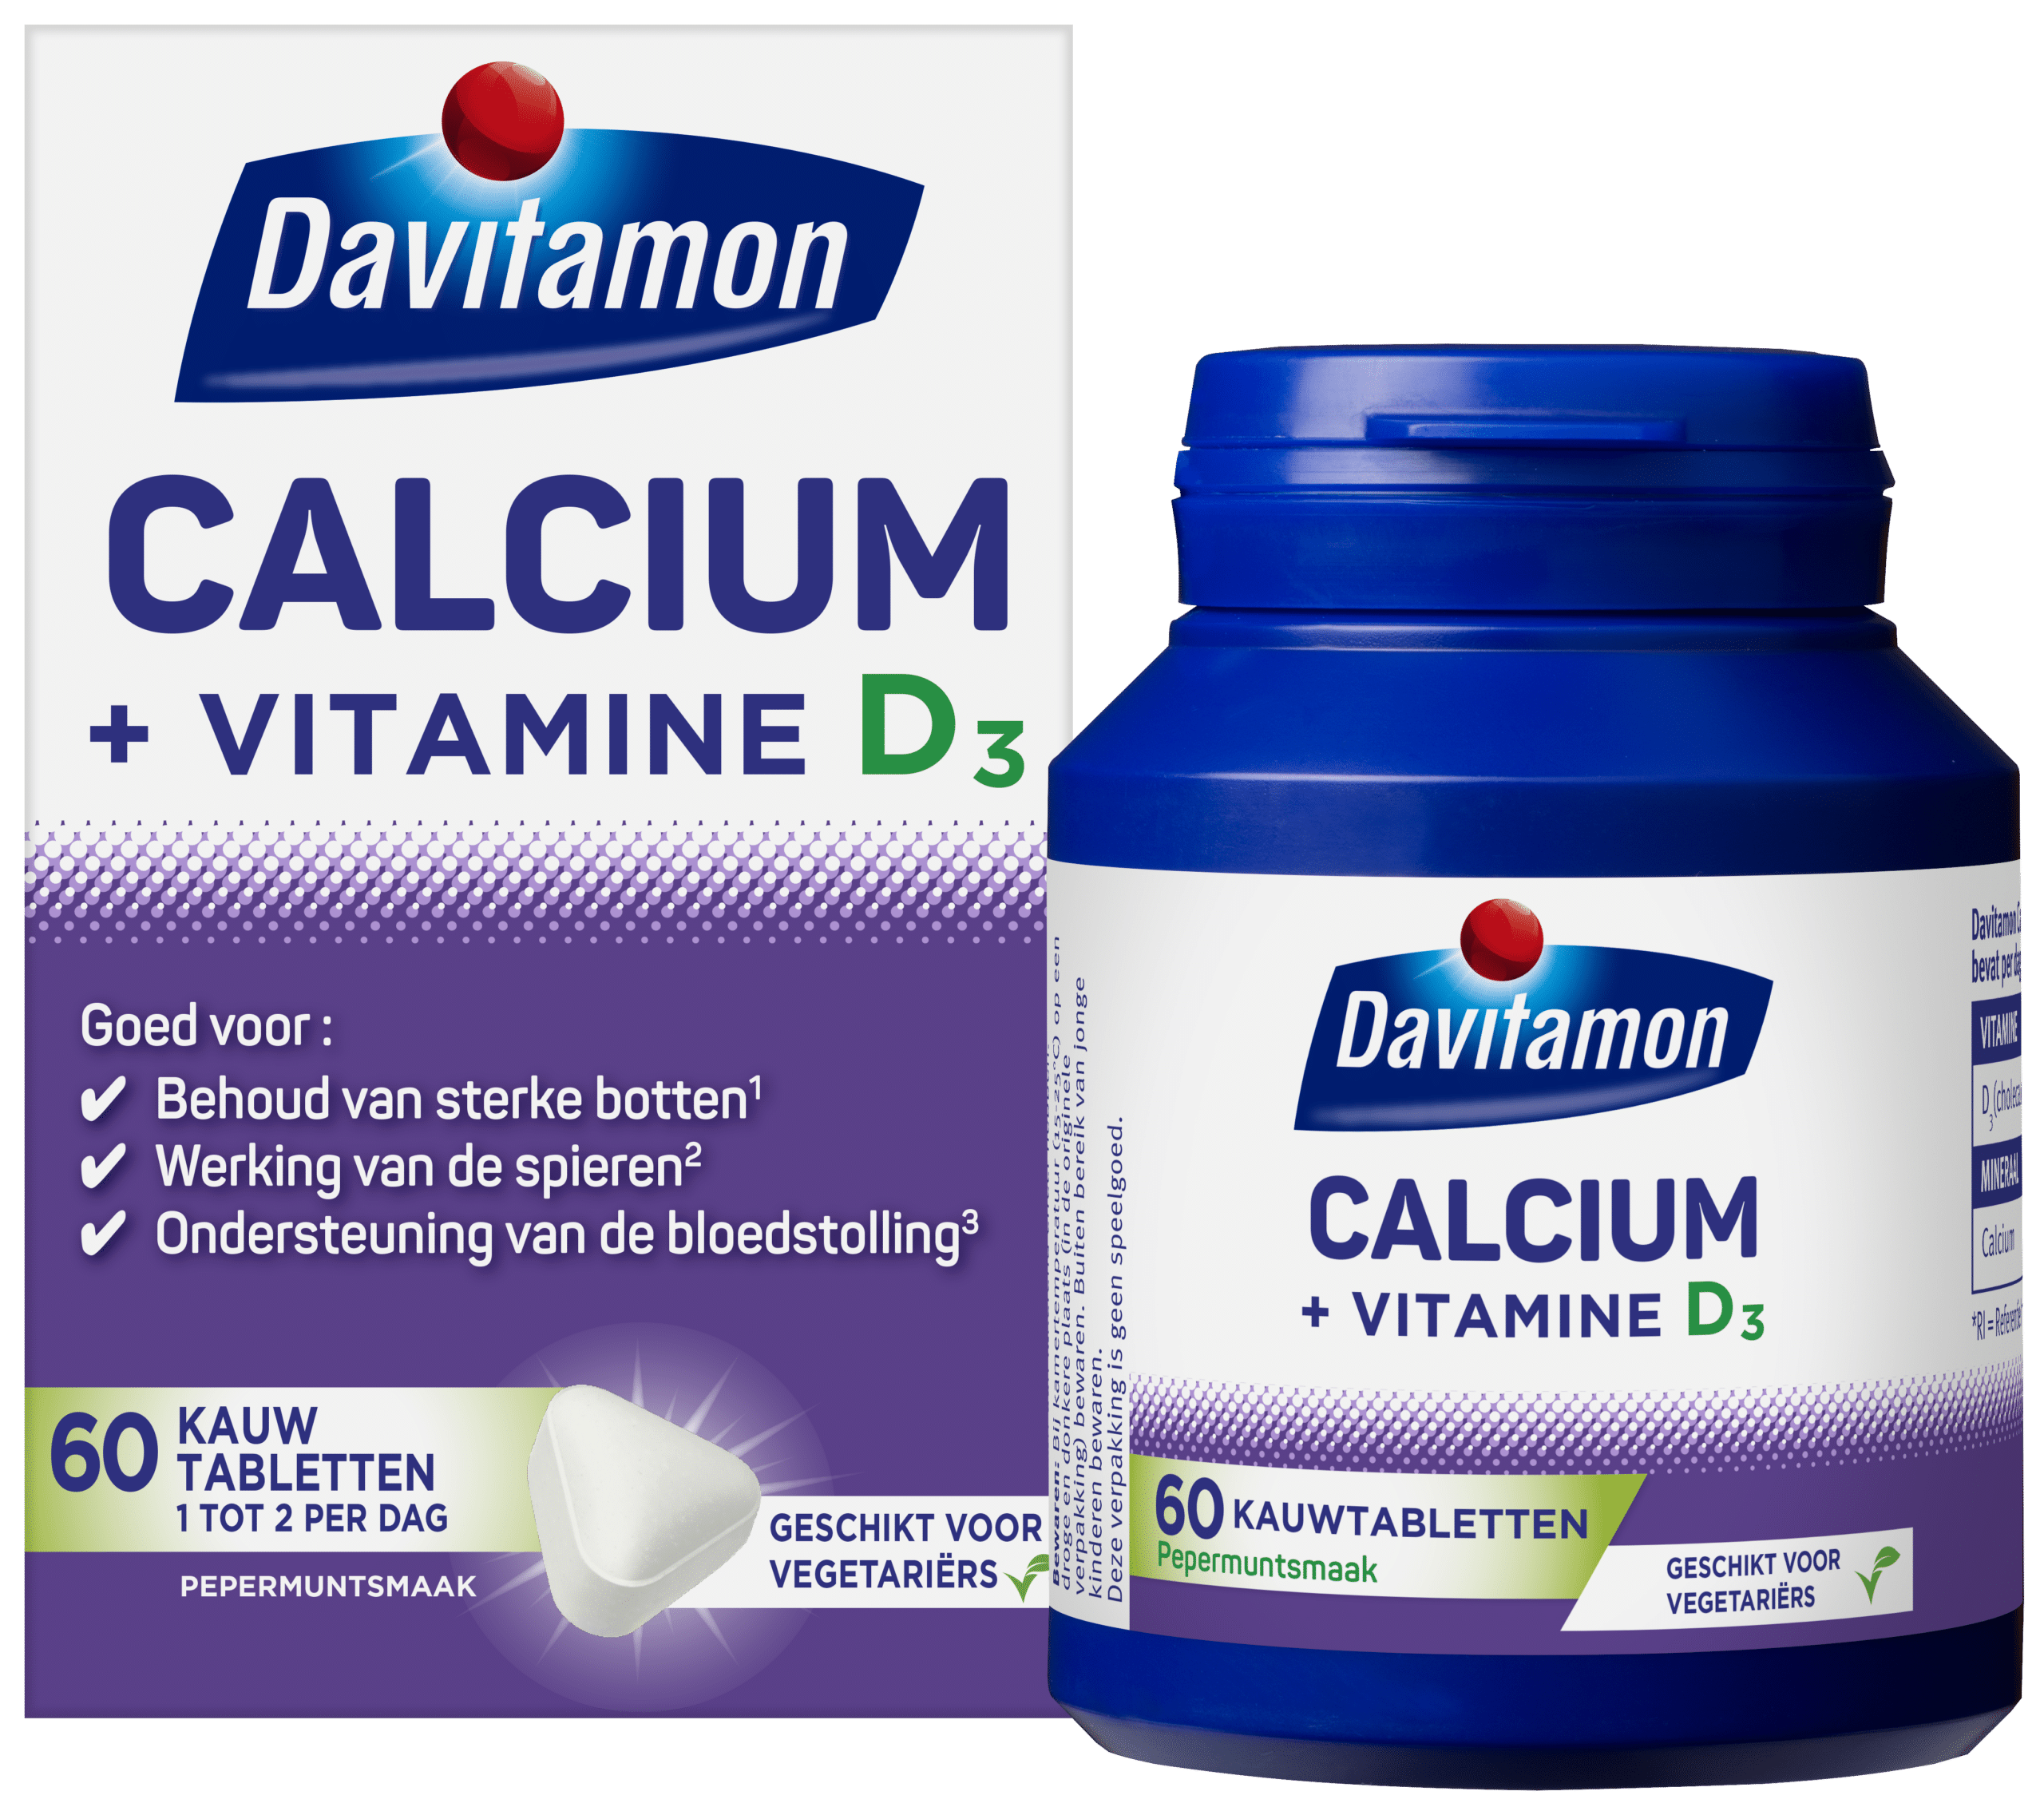 Davitamon Calcium + Vitamine D3 – 60 kauwtabletten